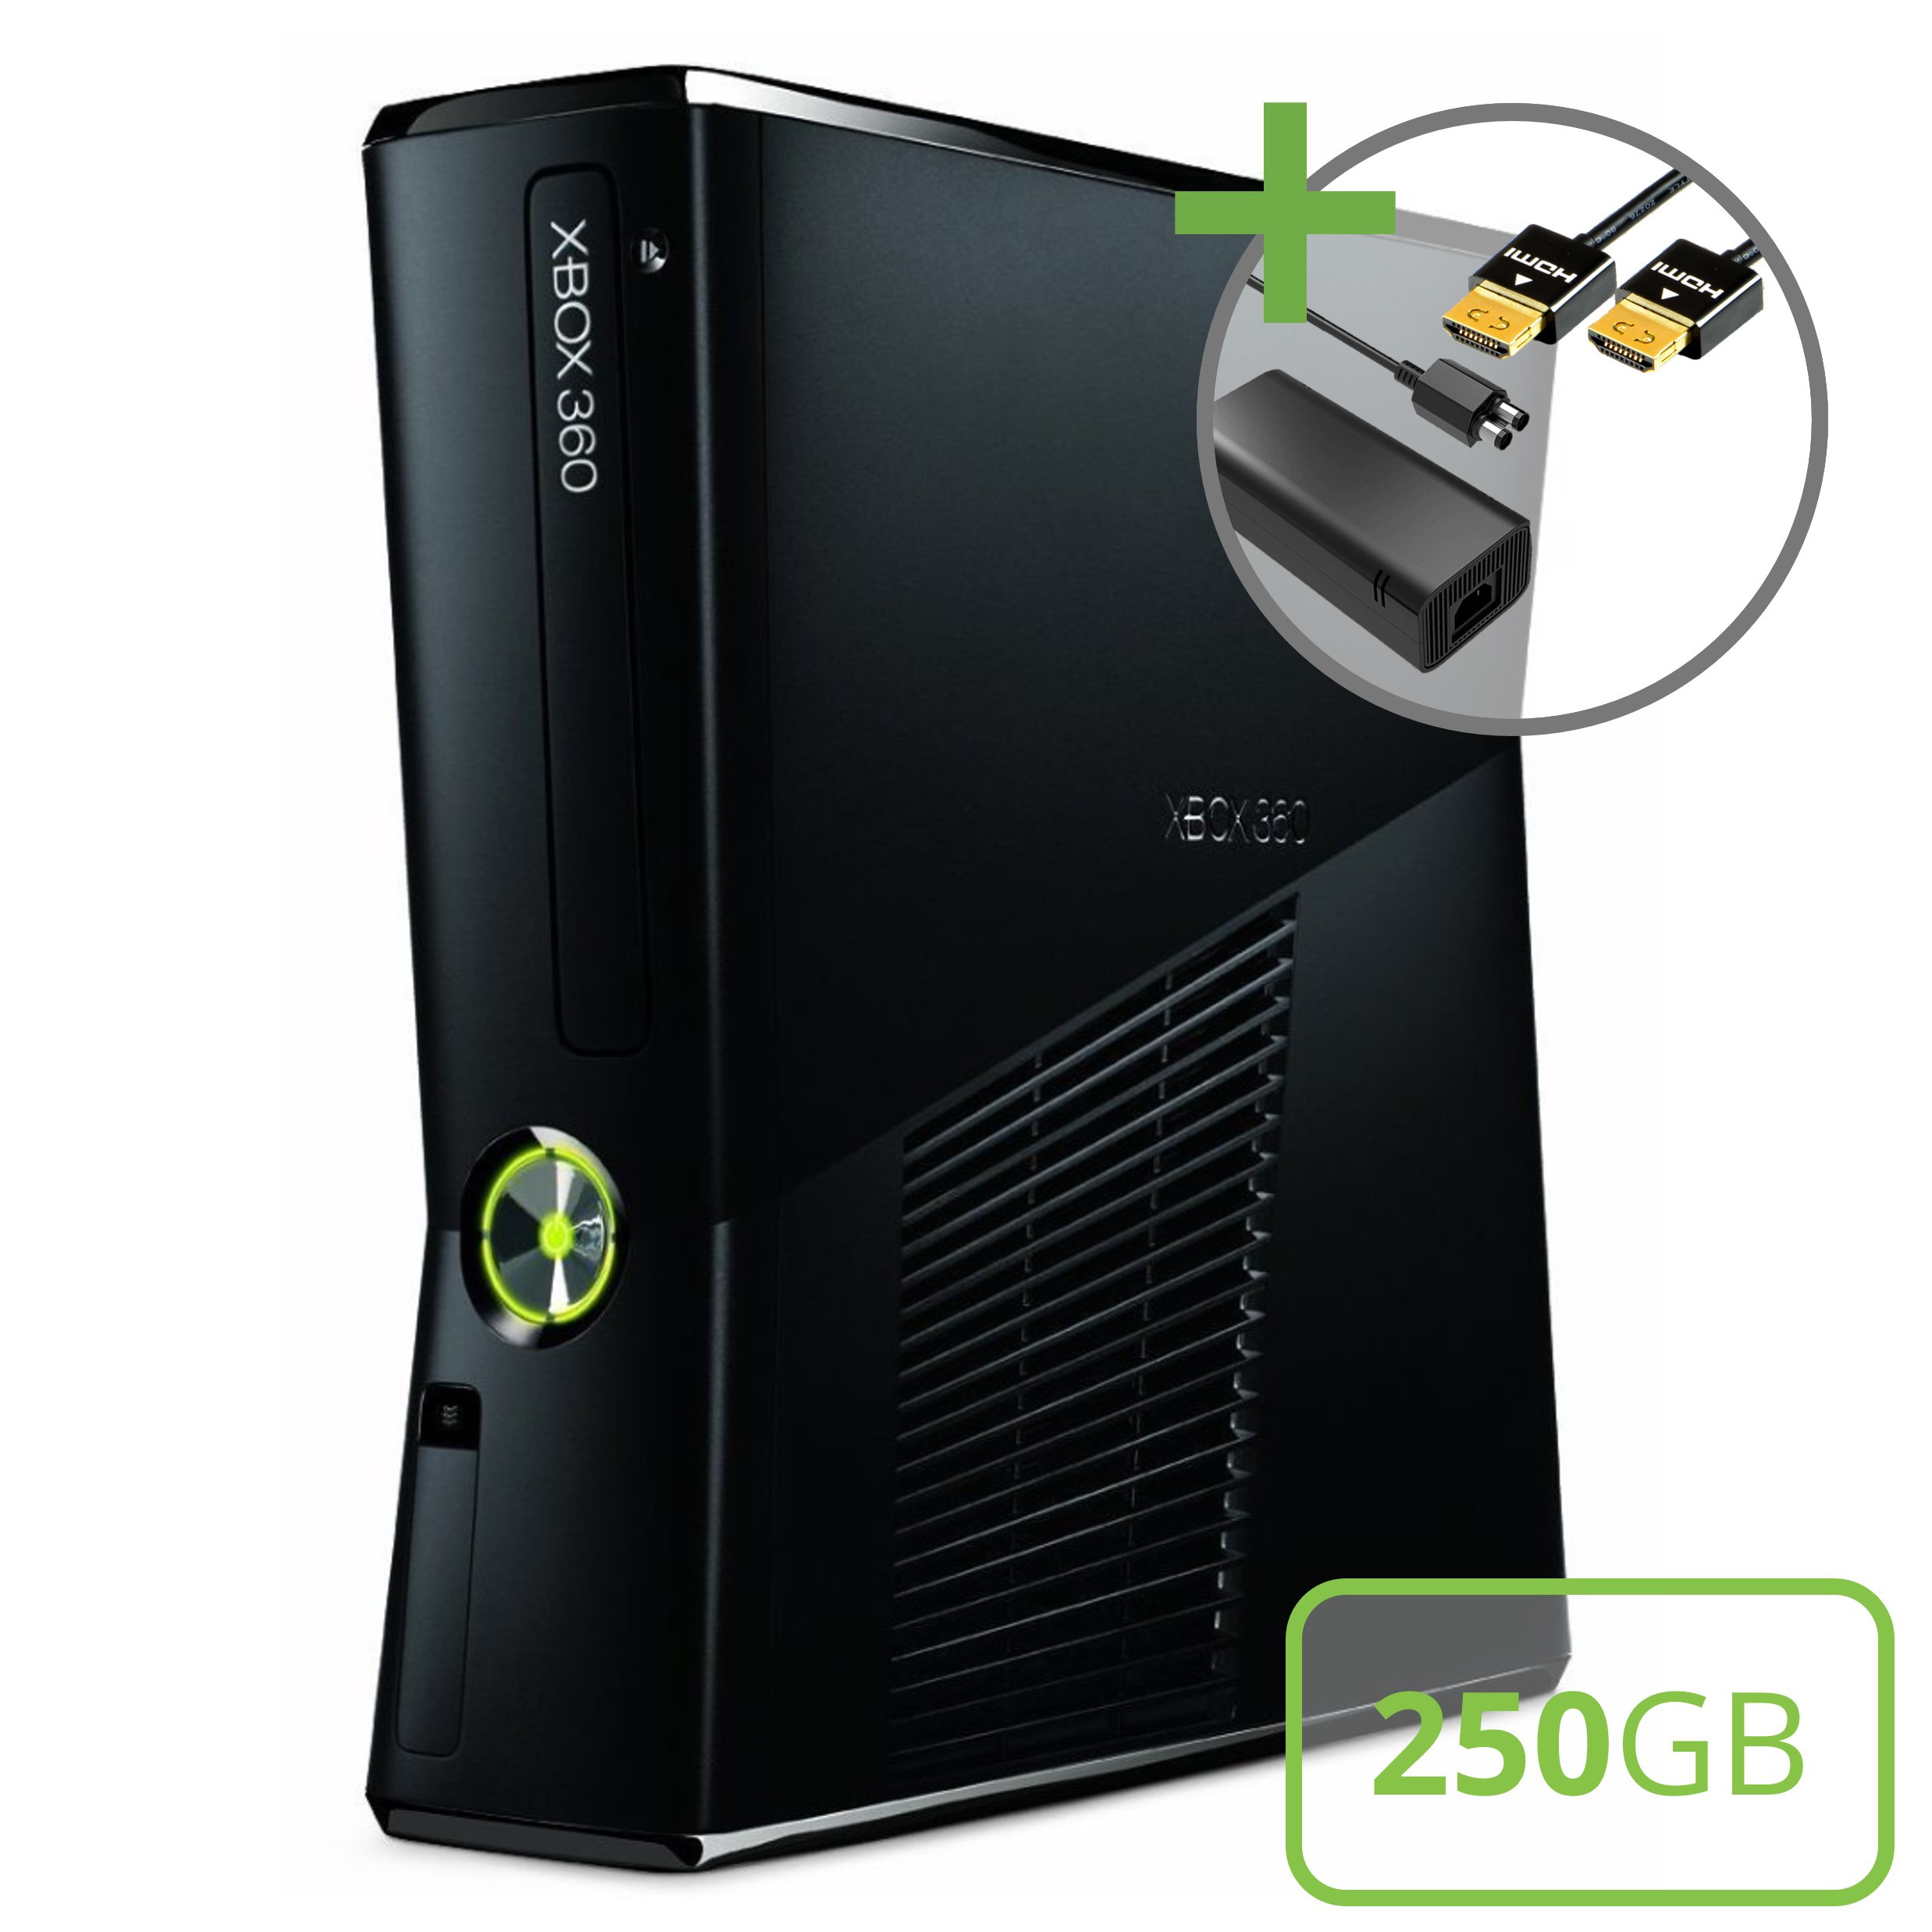 Vertolking schilder Kenia Microsoft Xbox 360 Slim Console (250GB) ⭐ Xbox 360 Hardware